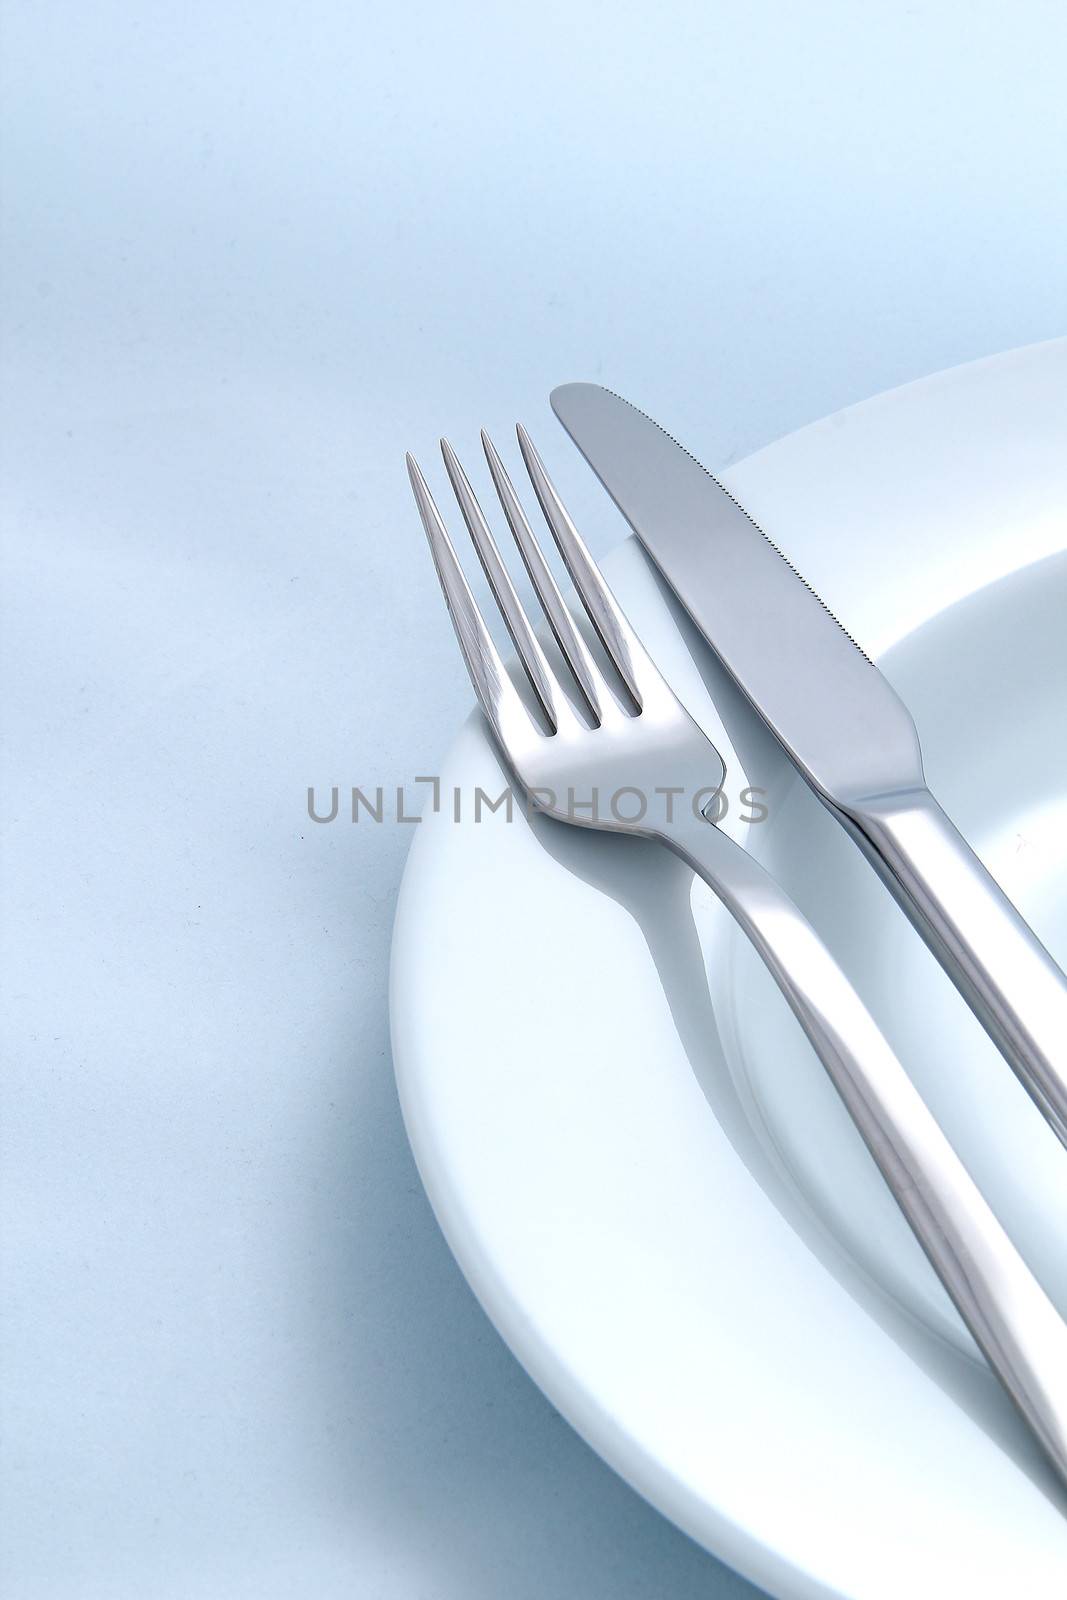 Diner utensils by dynamicfoto